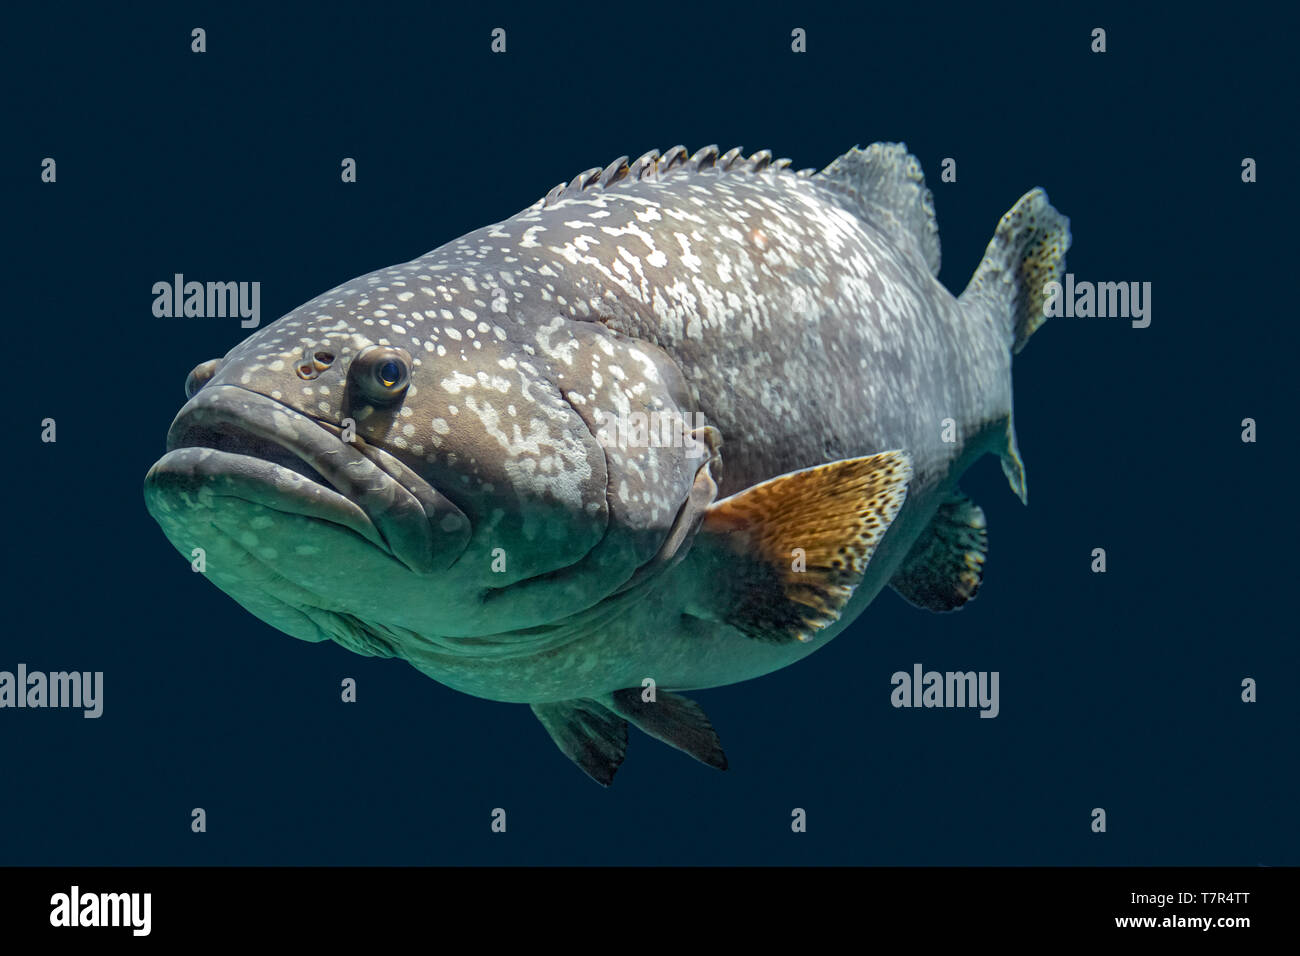 Giant grouper fish swimming in dark aquatic ambiance Stock Photo